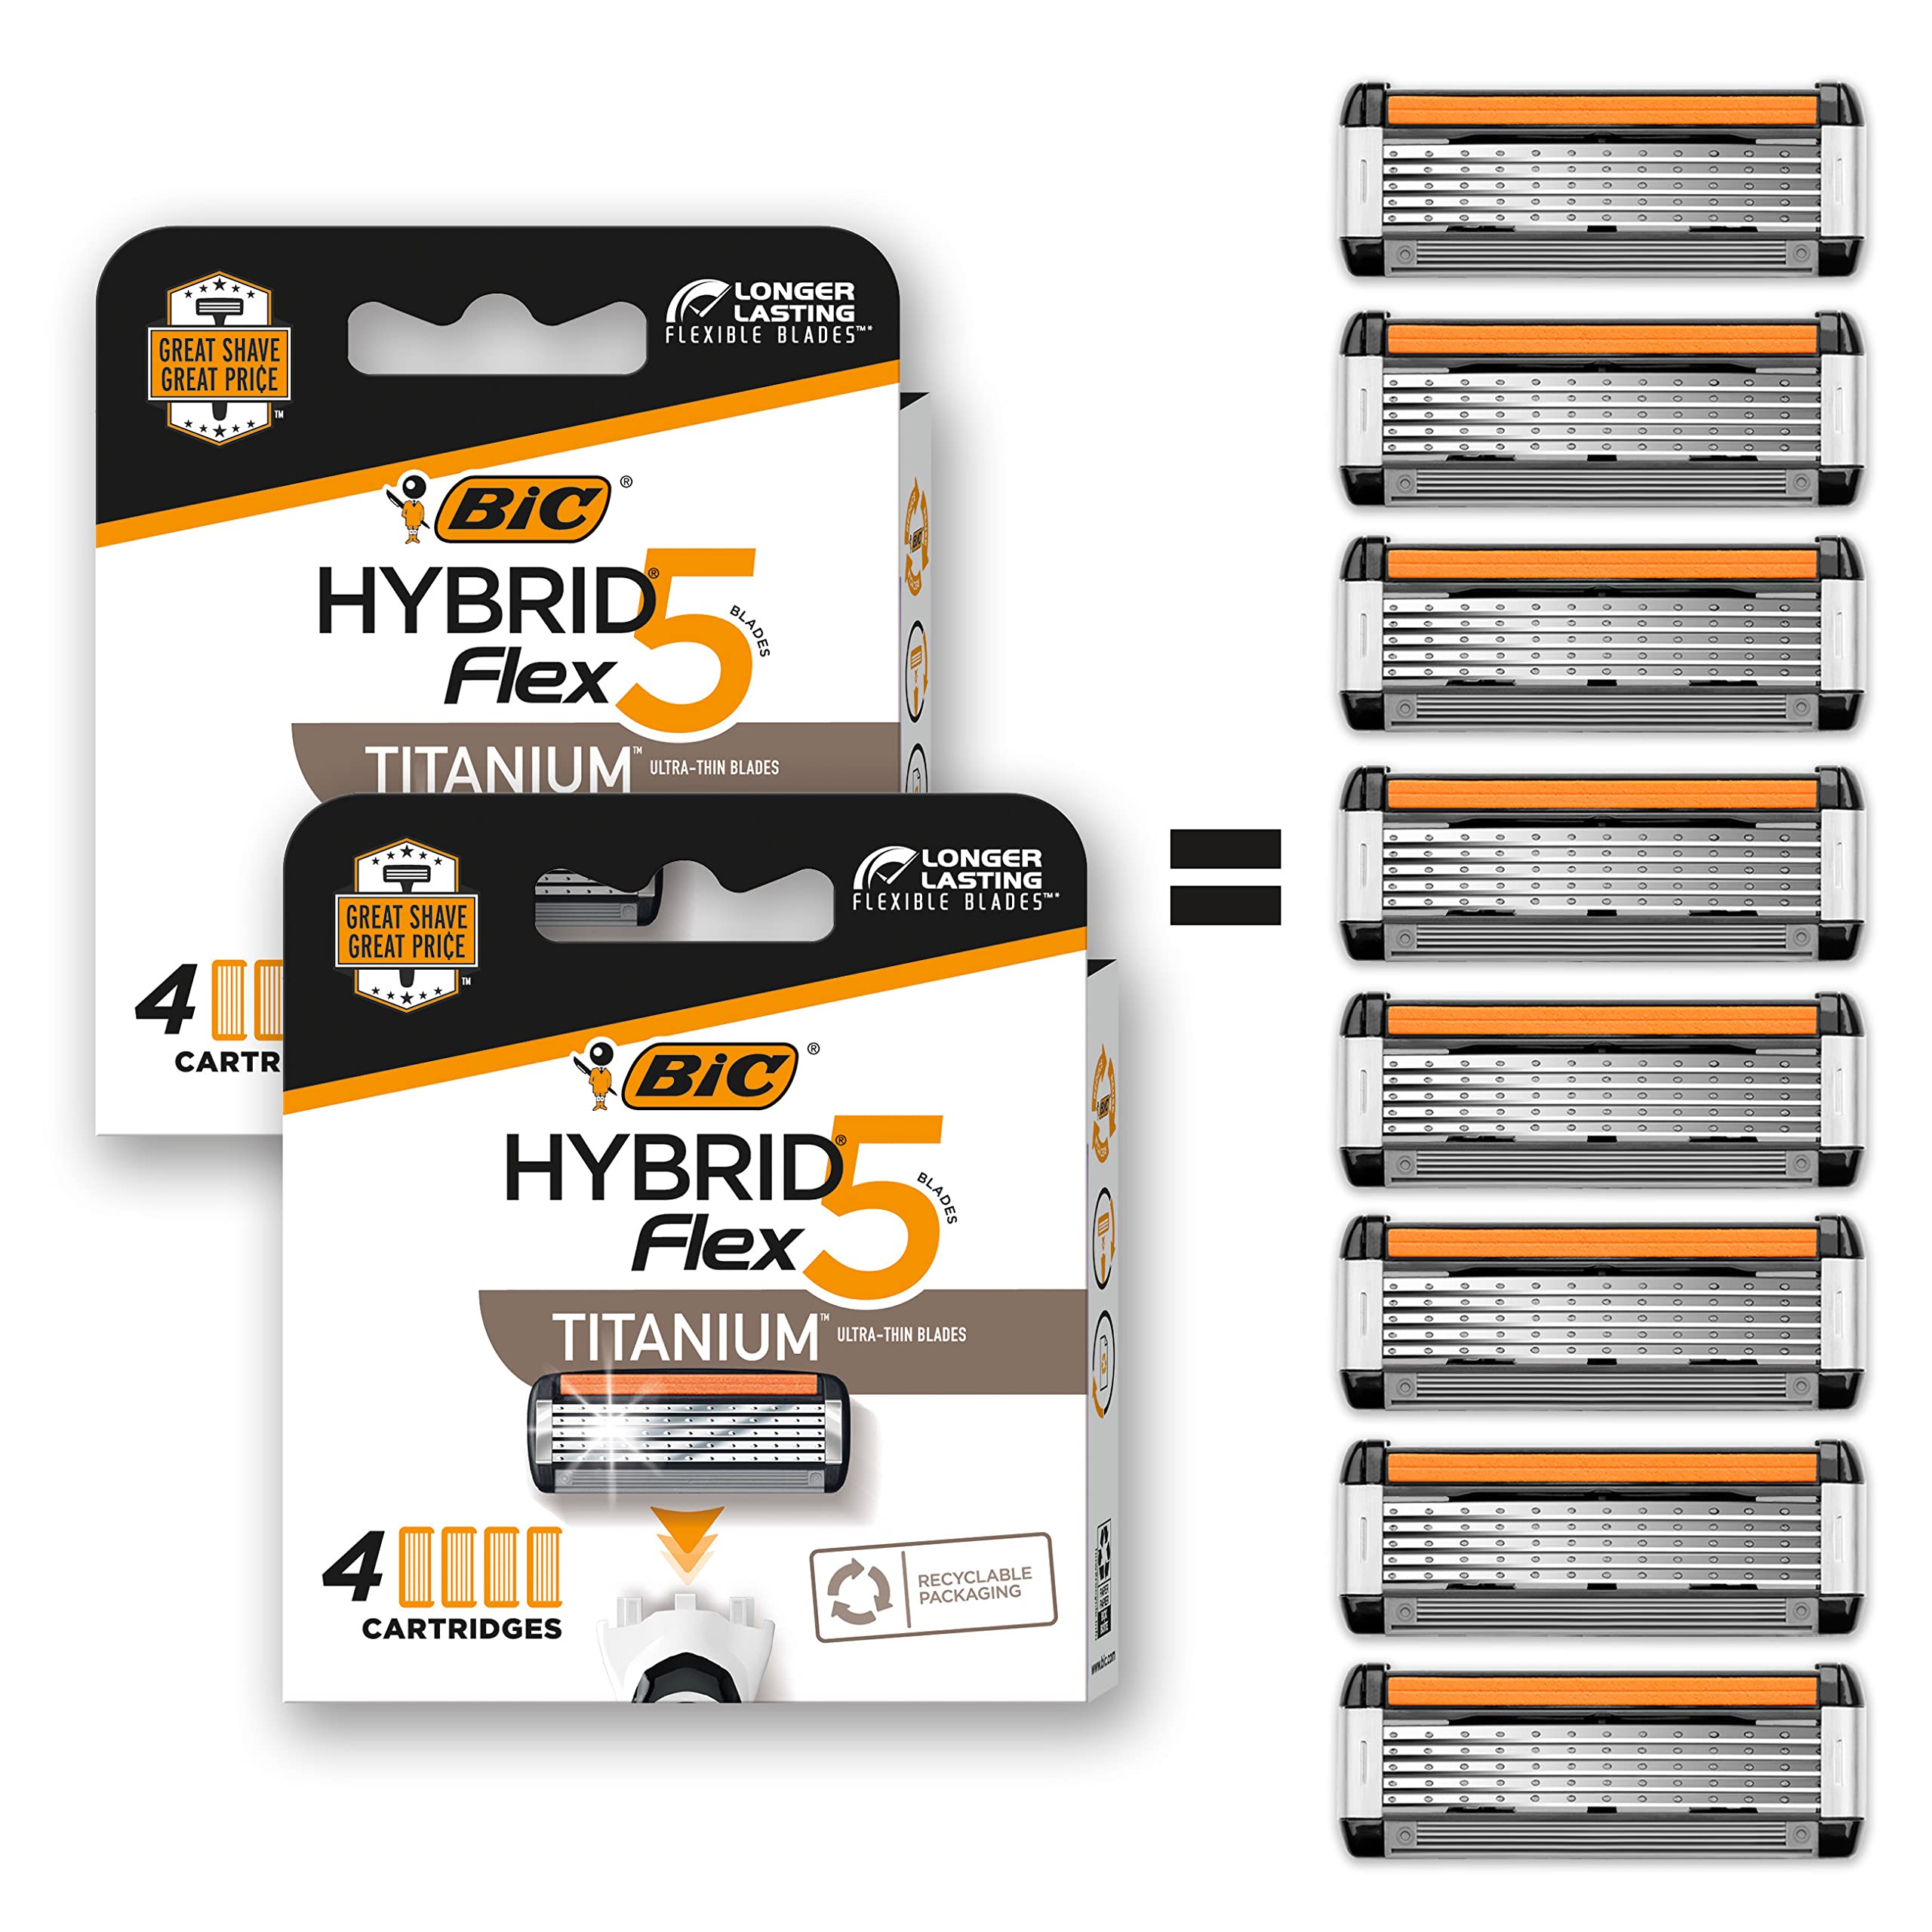 BIC Hybrid Flex 5 Disposable Razor Cartridges